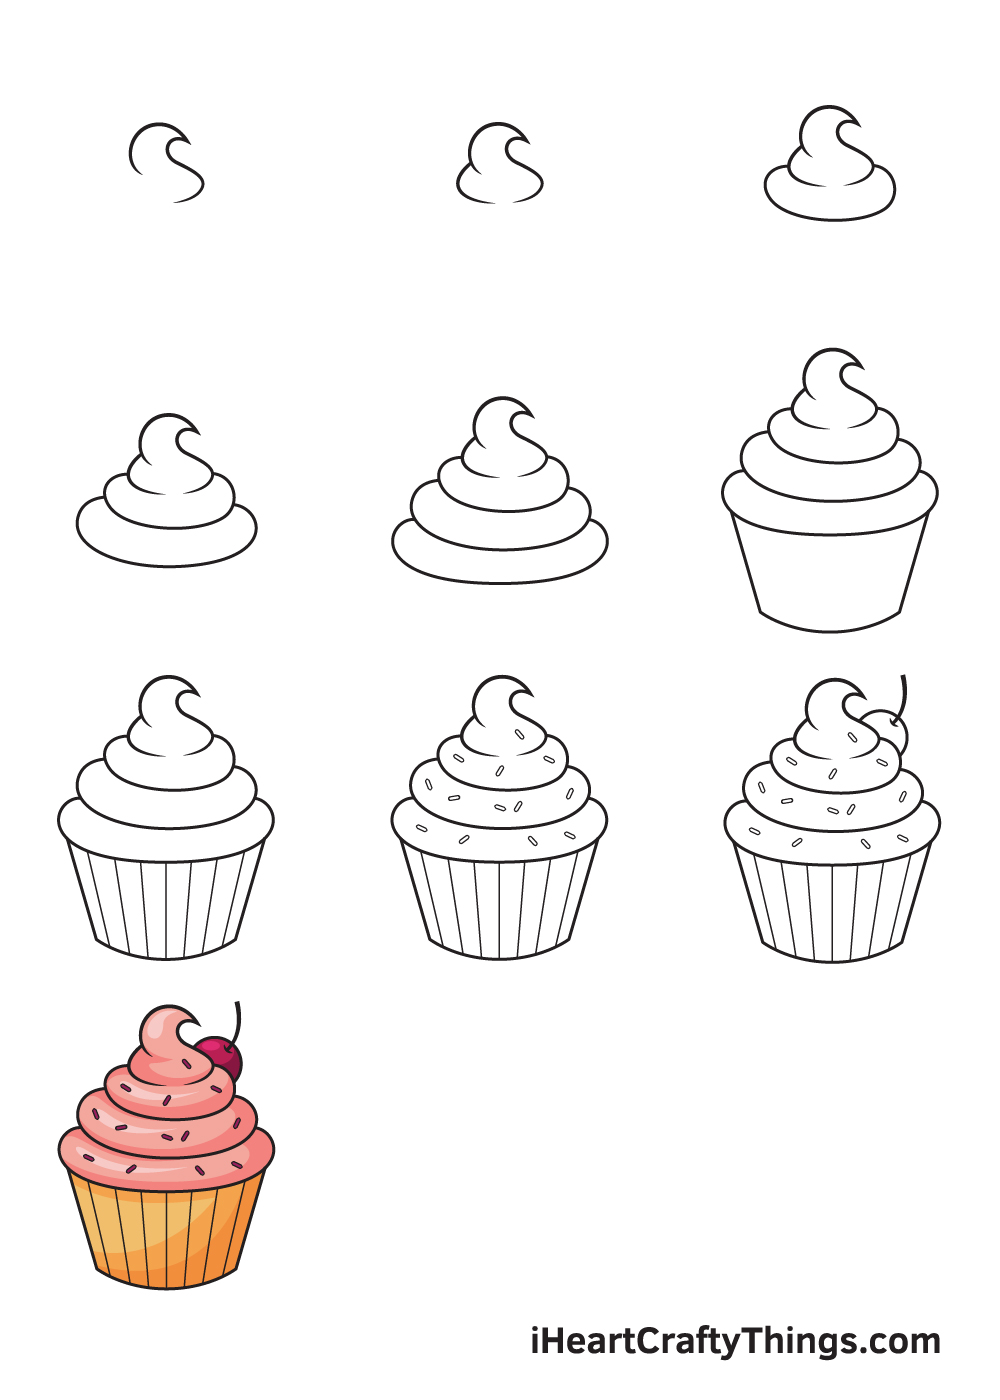 Drawing Cupcake in 9 Easy Steps